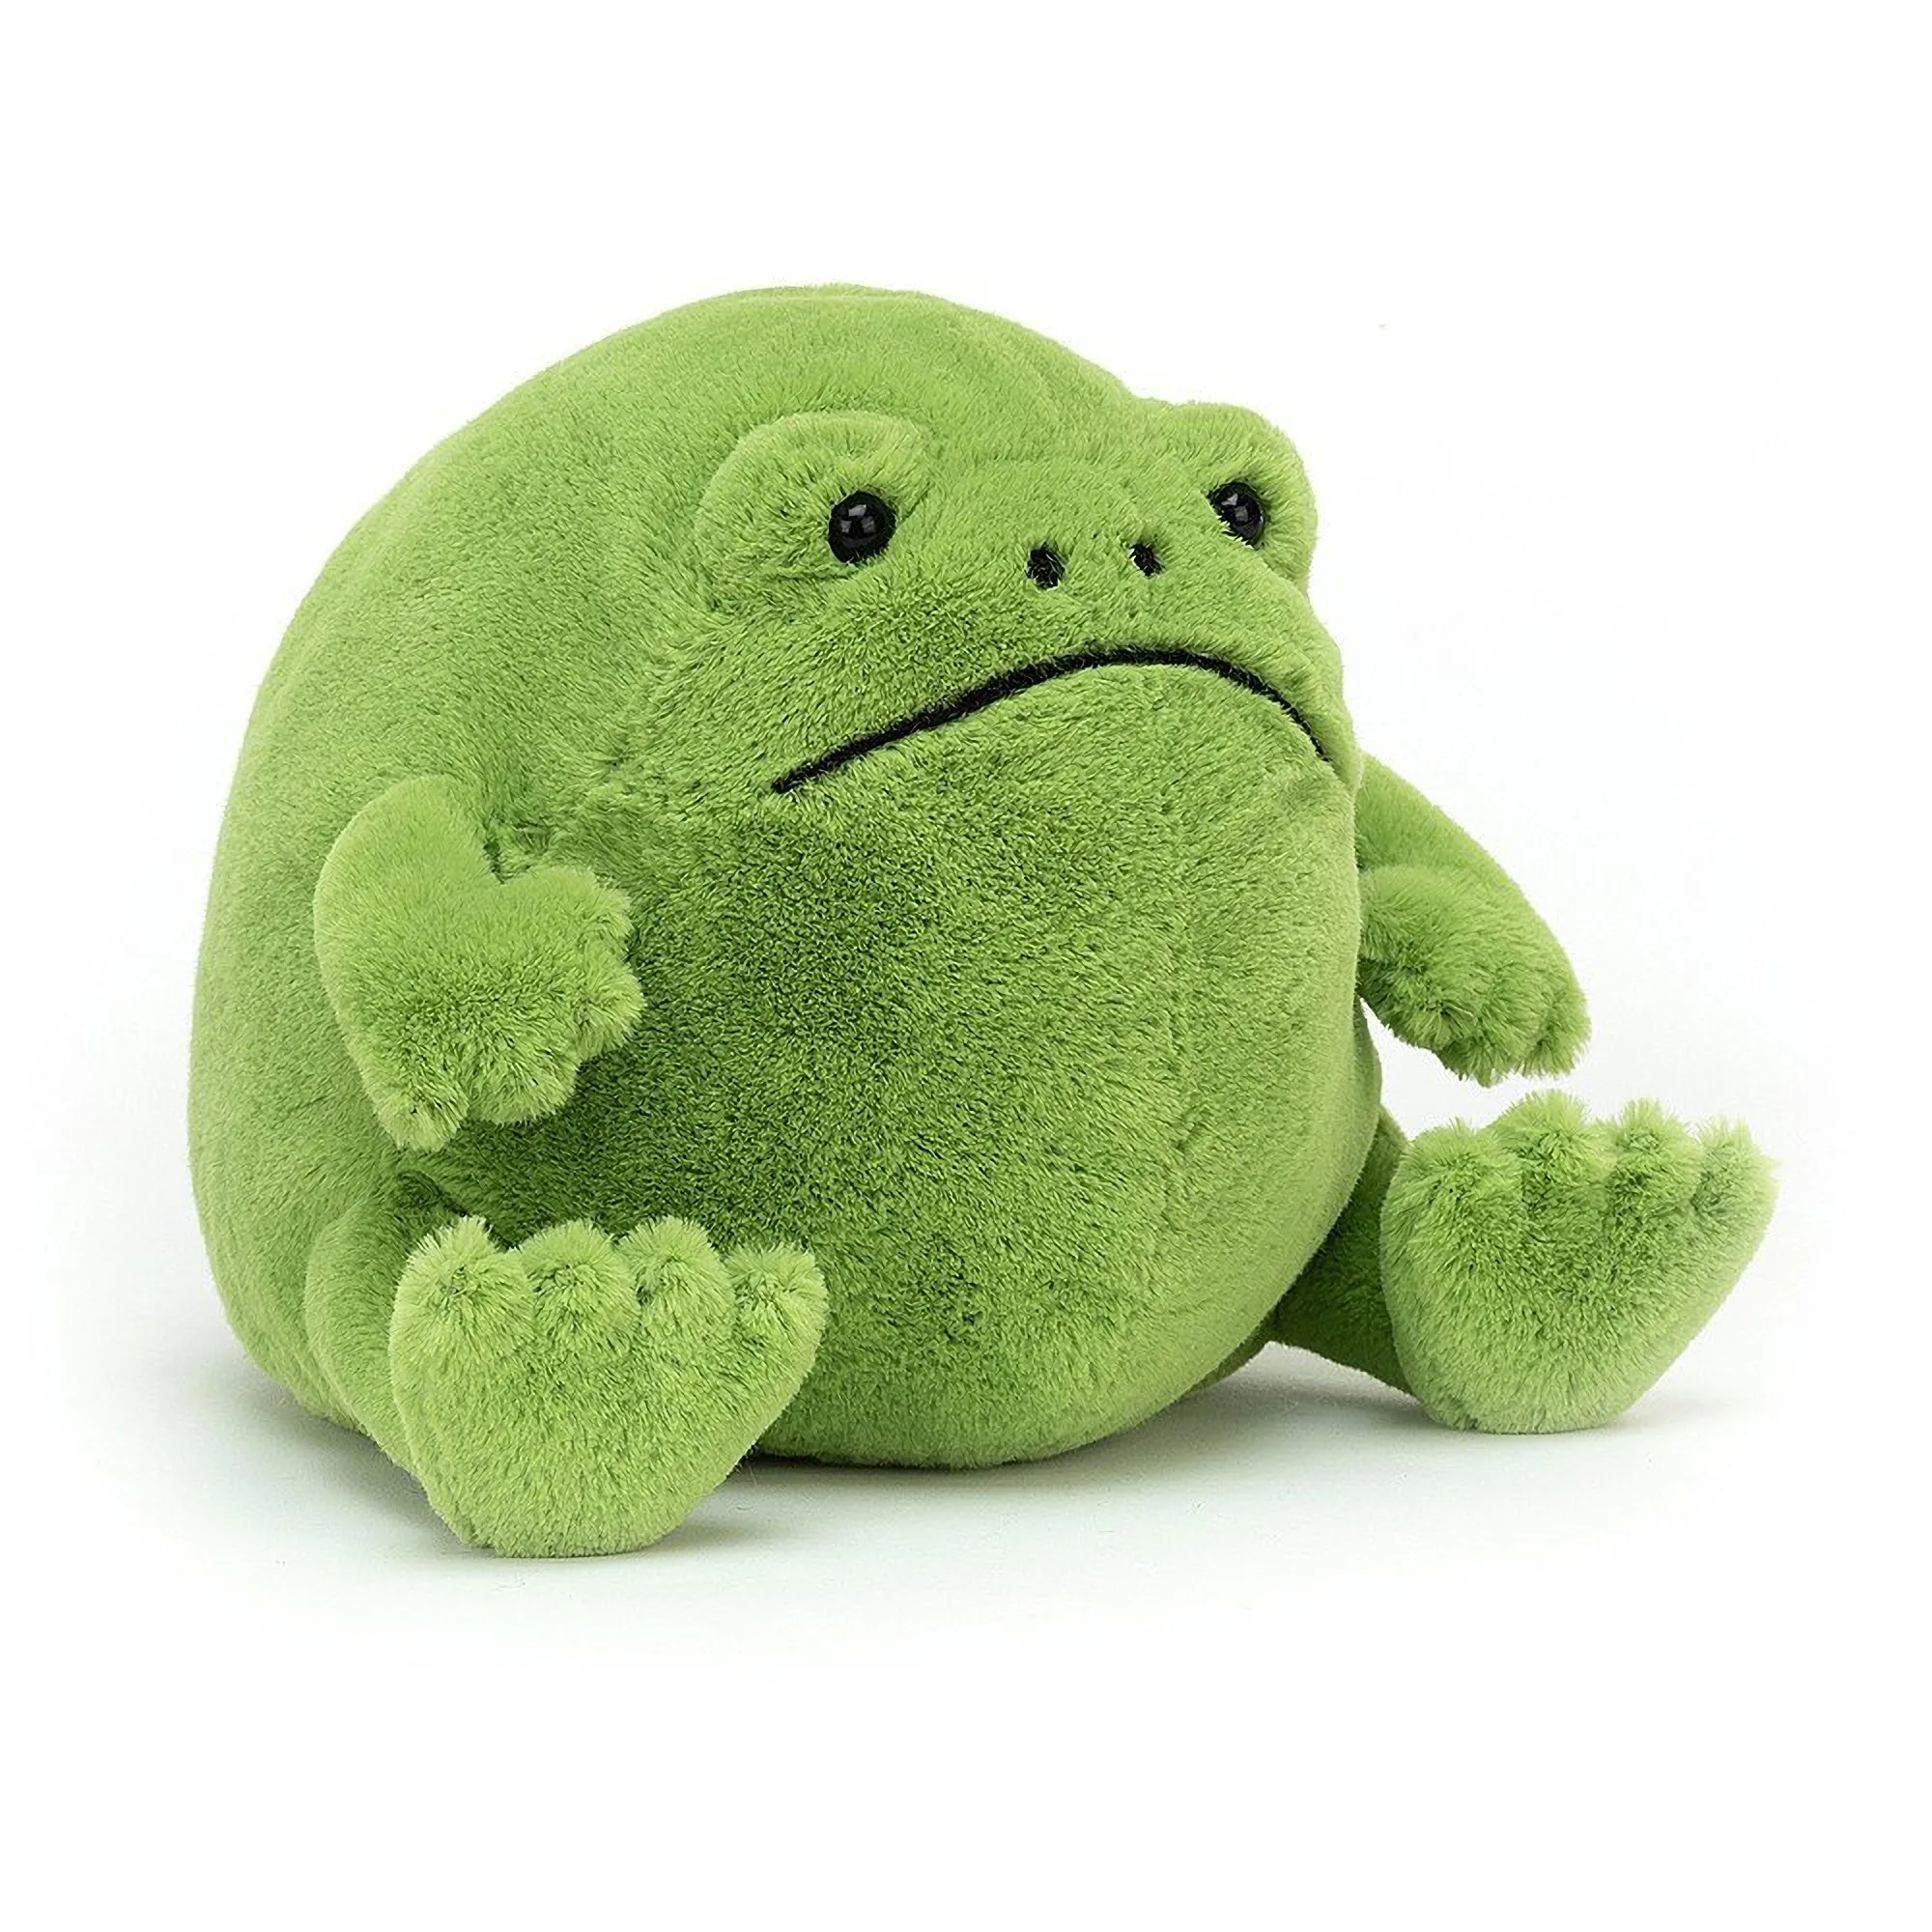 https://ae01.alicdn.com/kf/Sfbb4daee28e447b3b75f590dfab9bba74/20-35cm-Kawaii-Frog-Plush-Sad-Toad-Plush-Toy-Super-Soft-Stuffed-Animal-Lovely-Frog-Doll.jpg